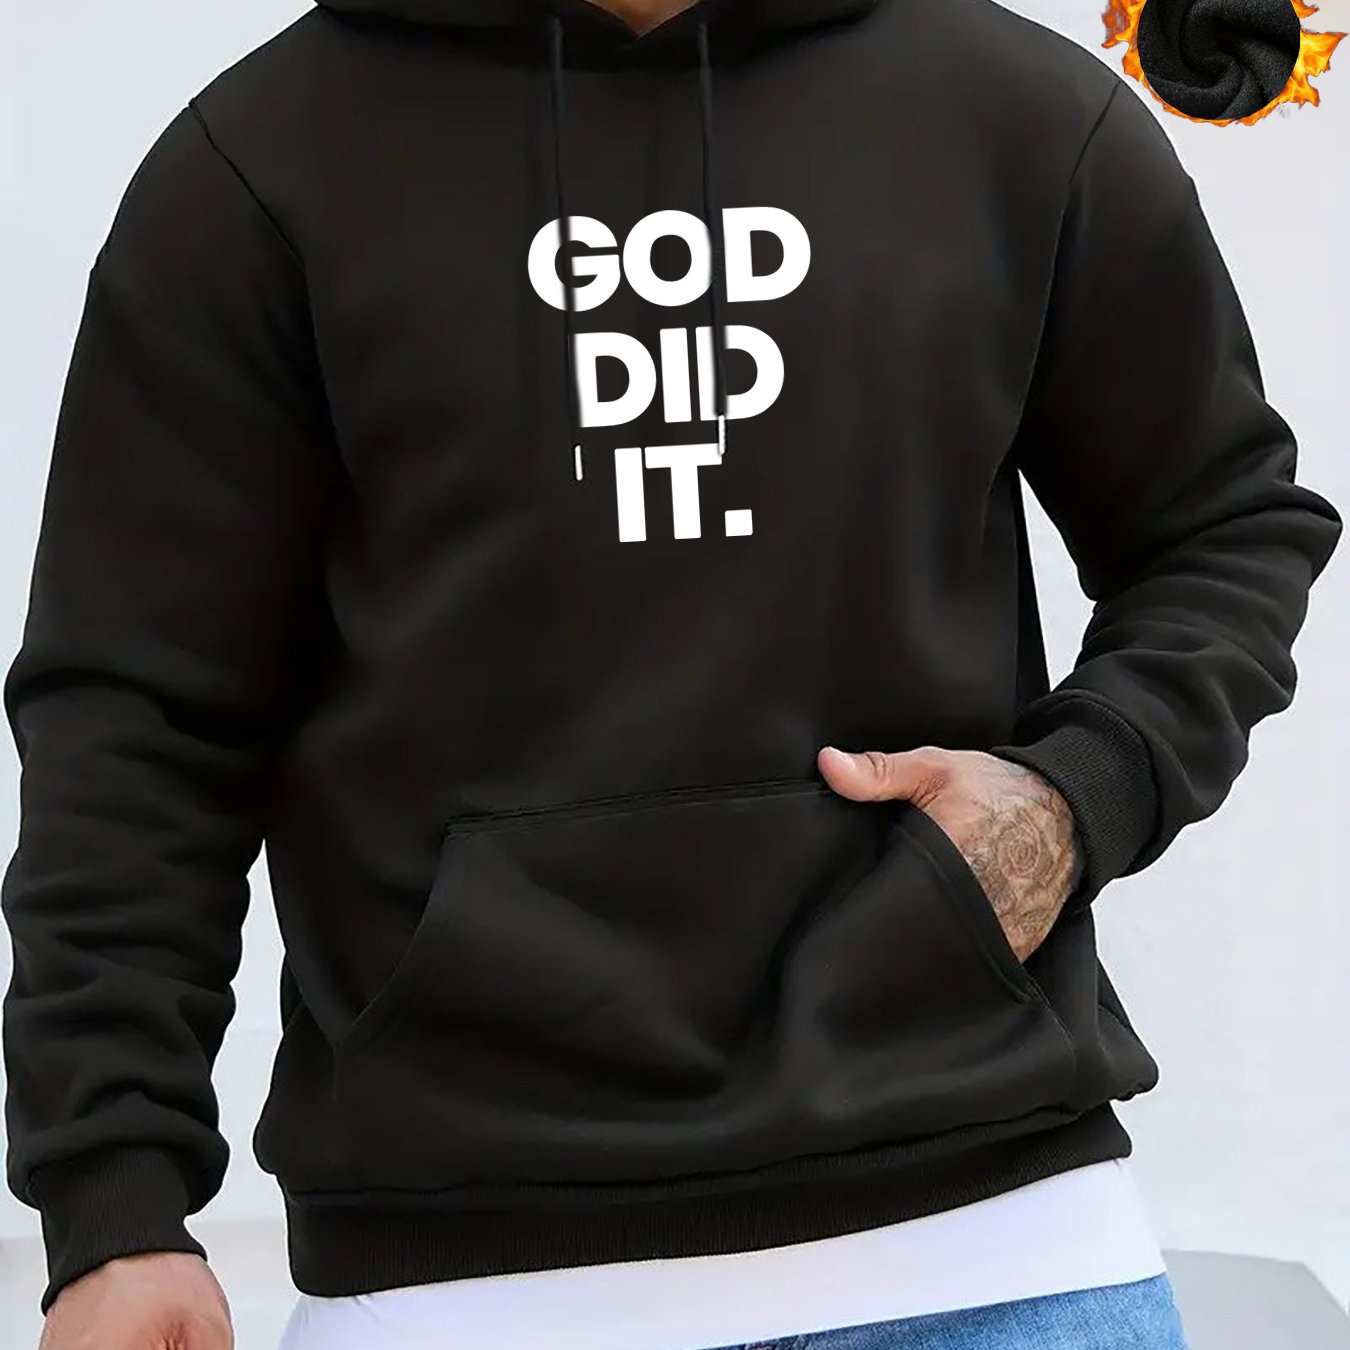 GOD DID IT Men's Christian Pullover Hooded Sweatshirt claimedbygoddesigns